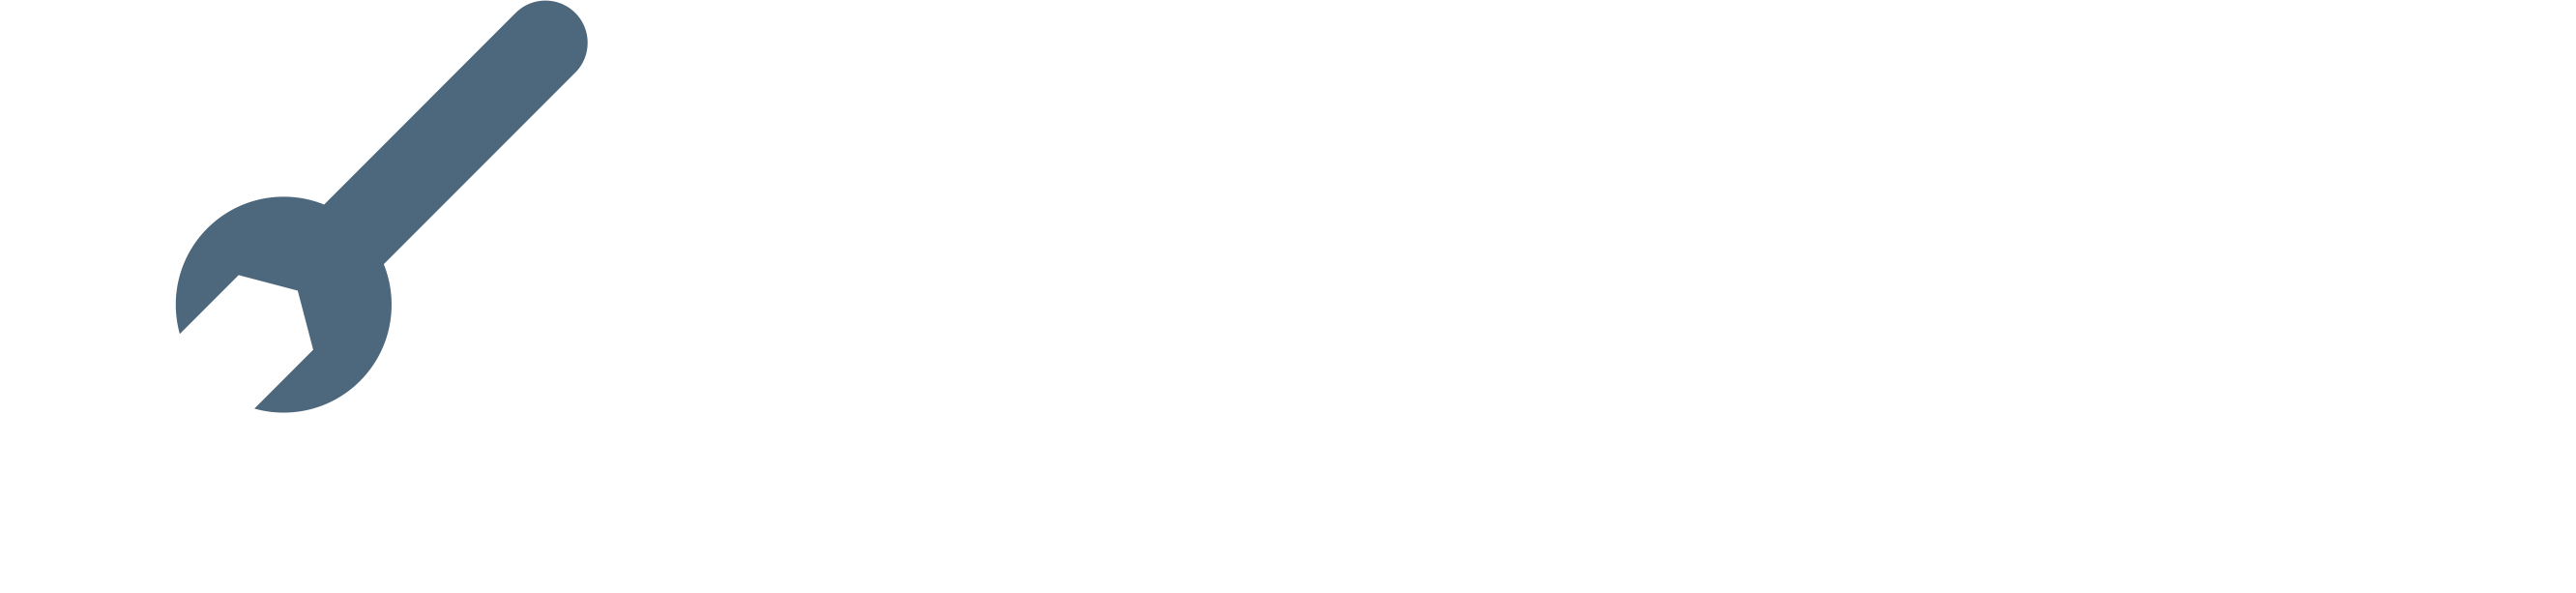 Service_Select_Logo.png